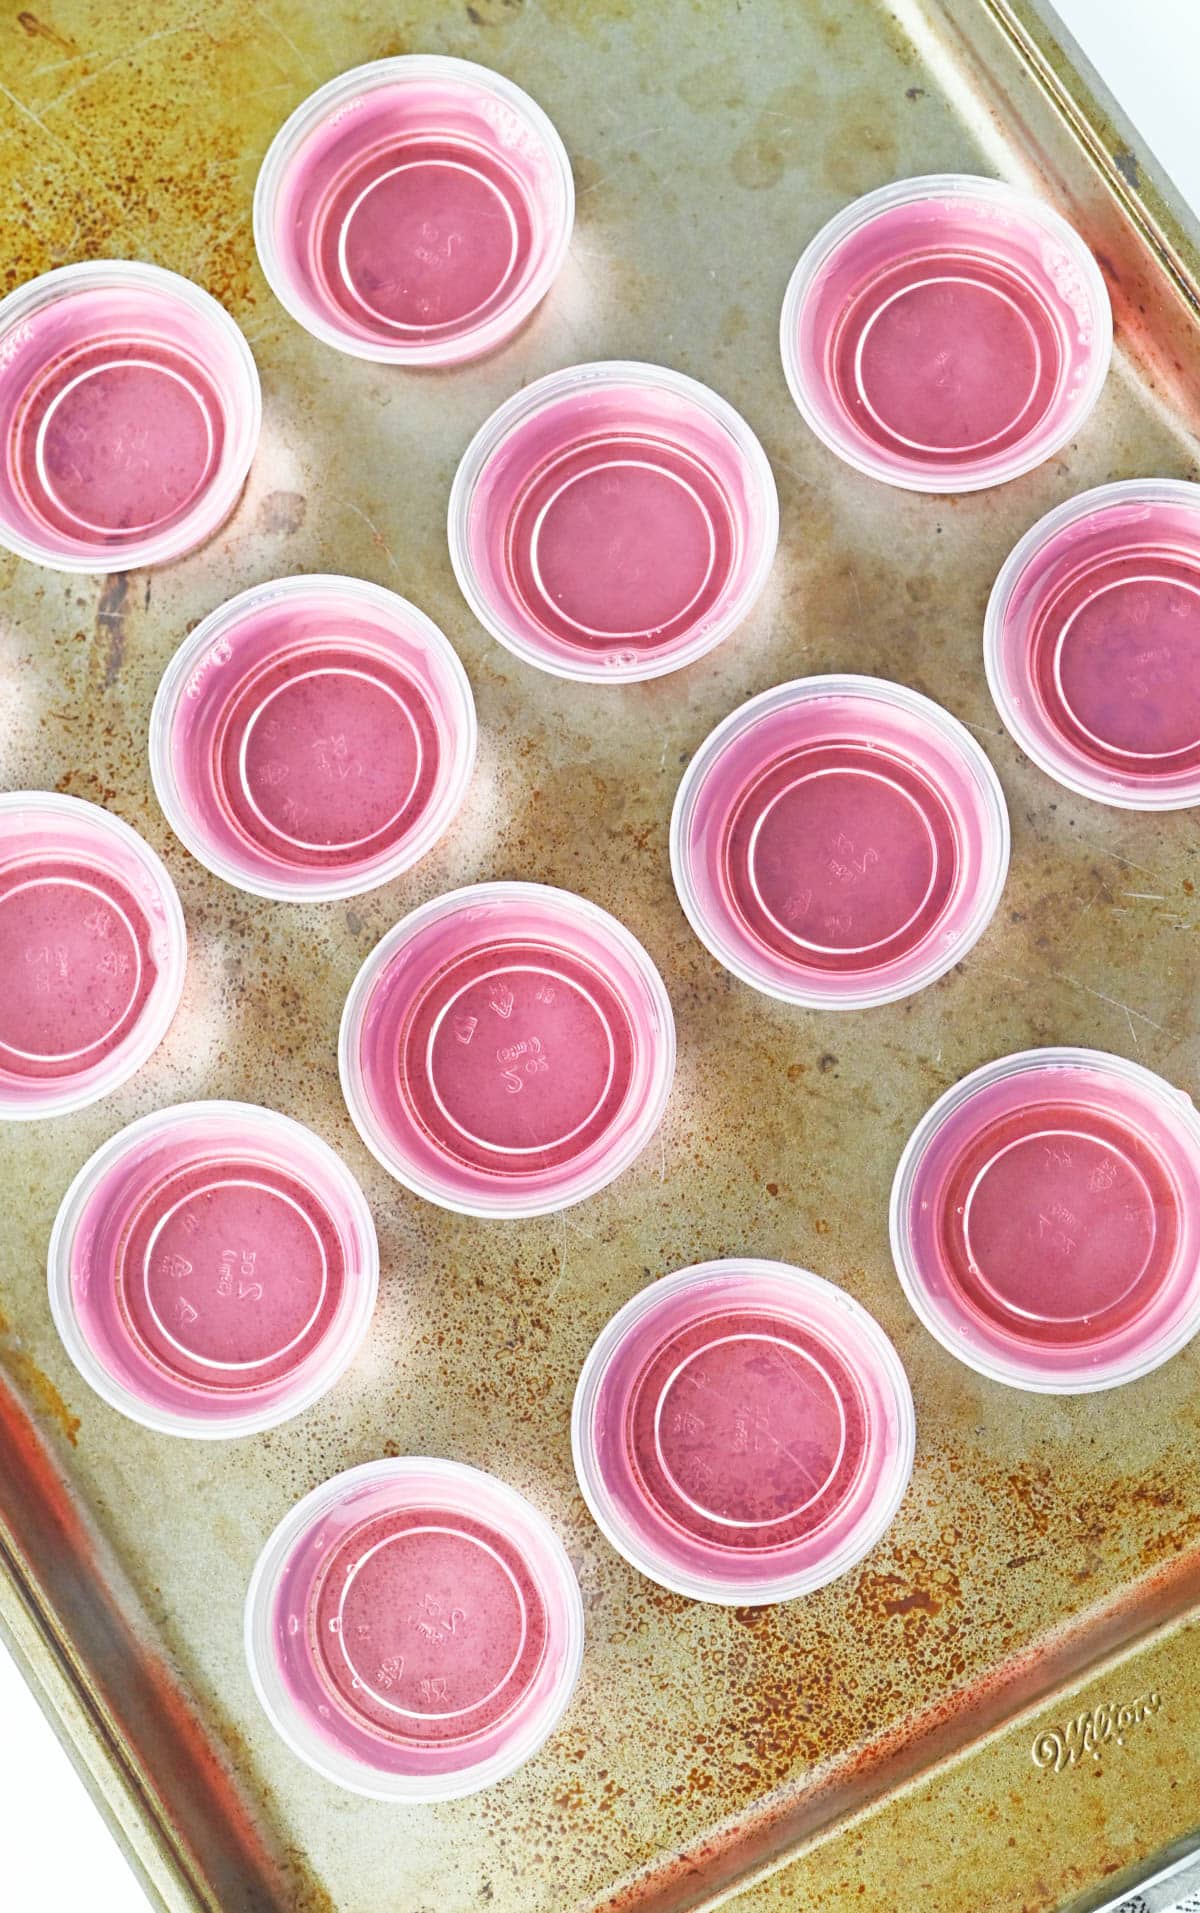 A tray of pink jello shots on a baking sheet.